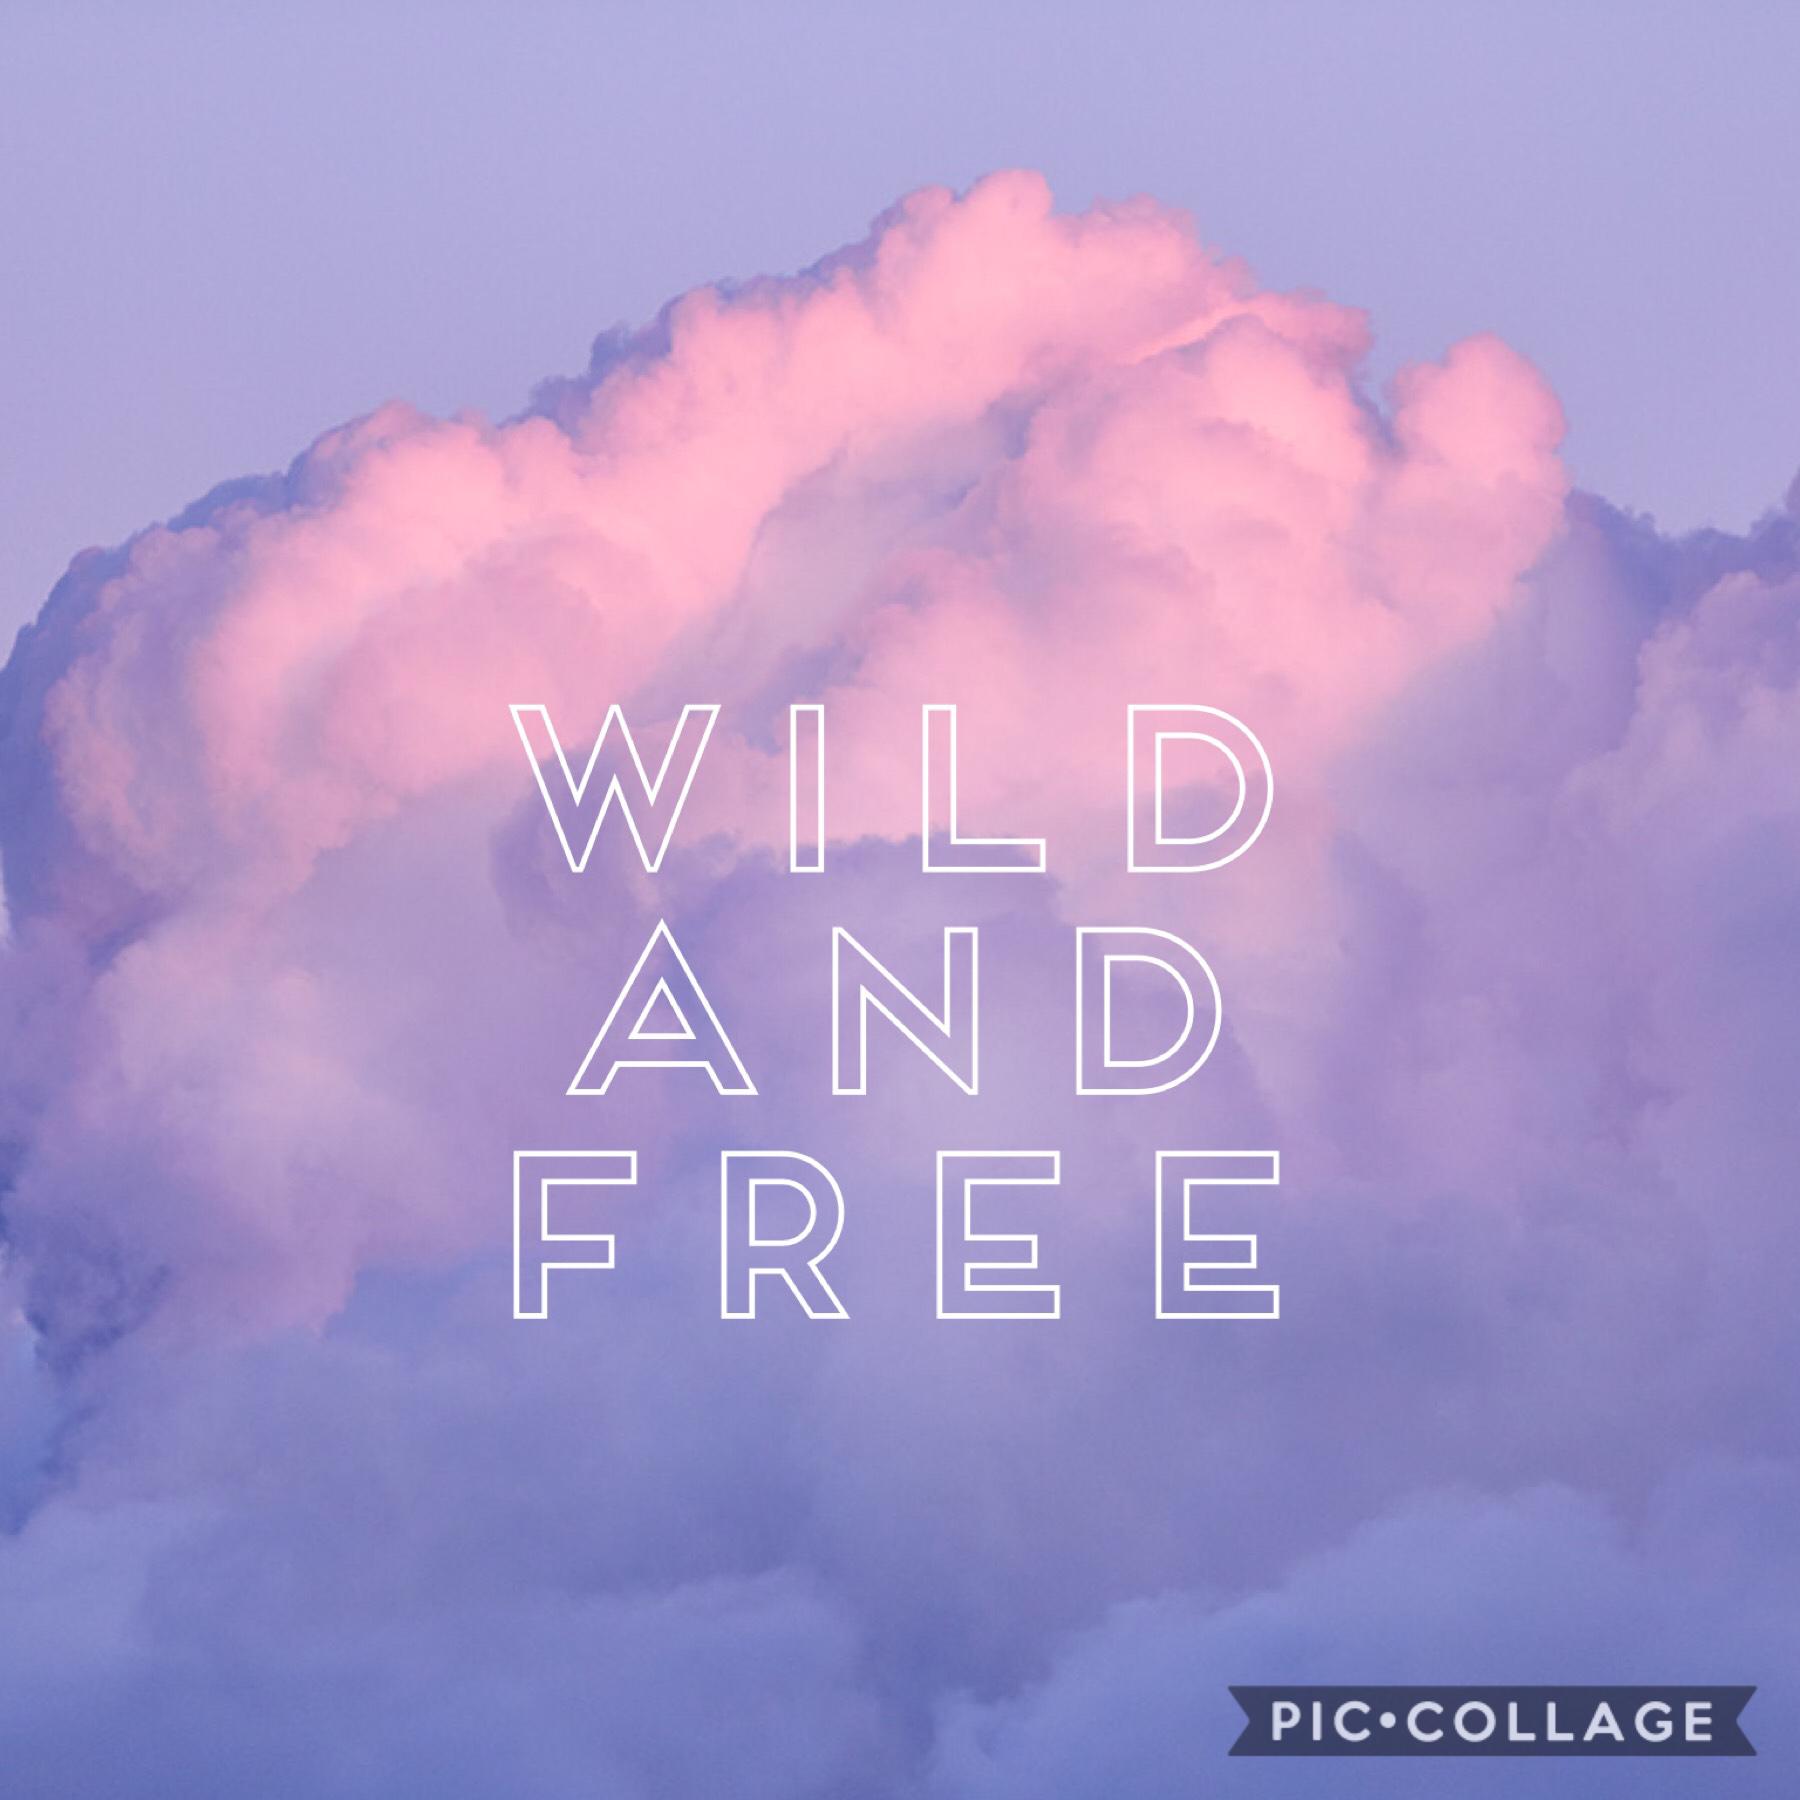 Wild and free ☁️☁️